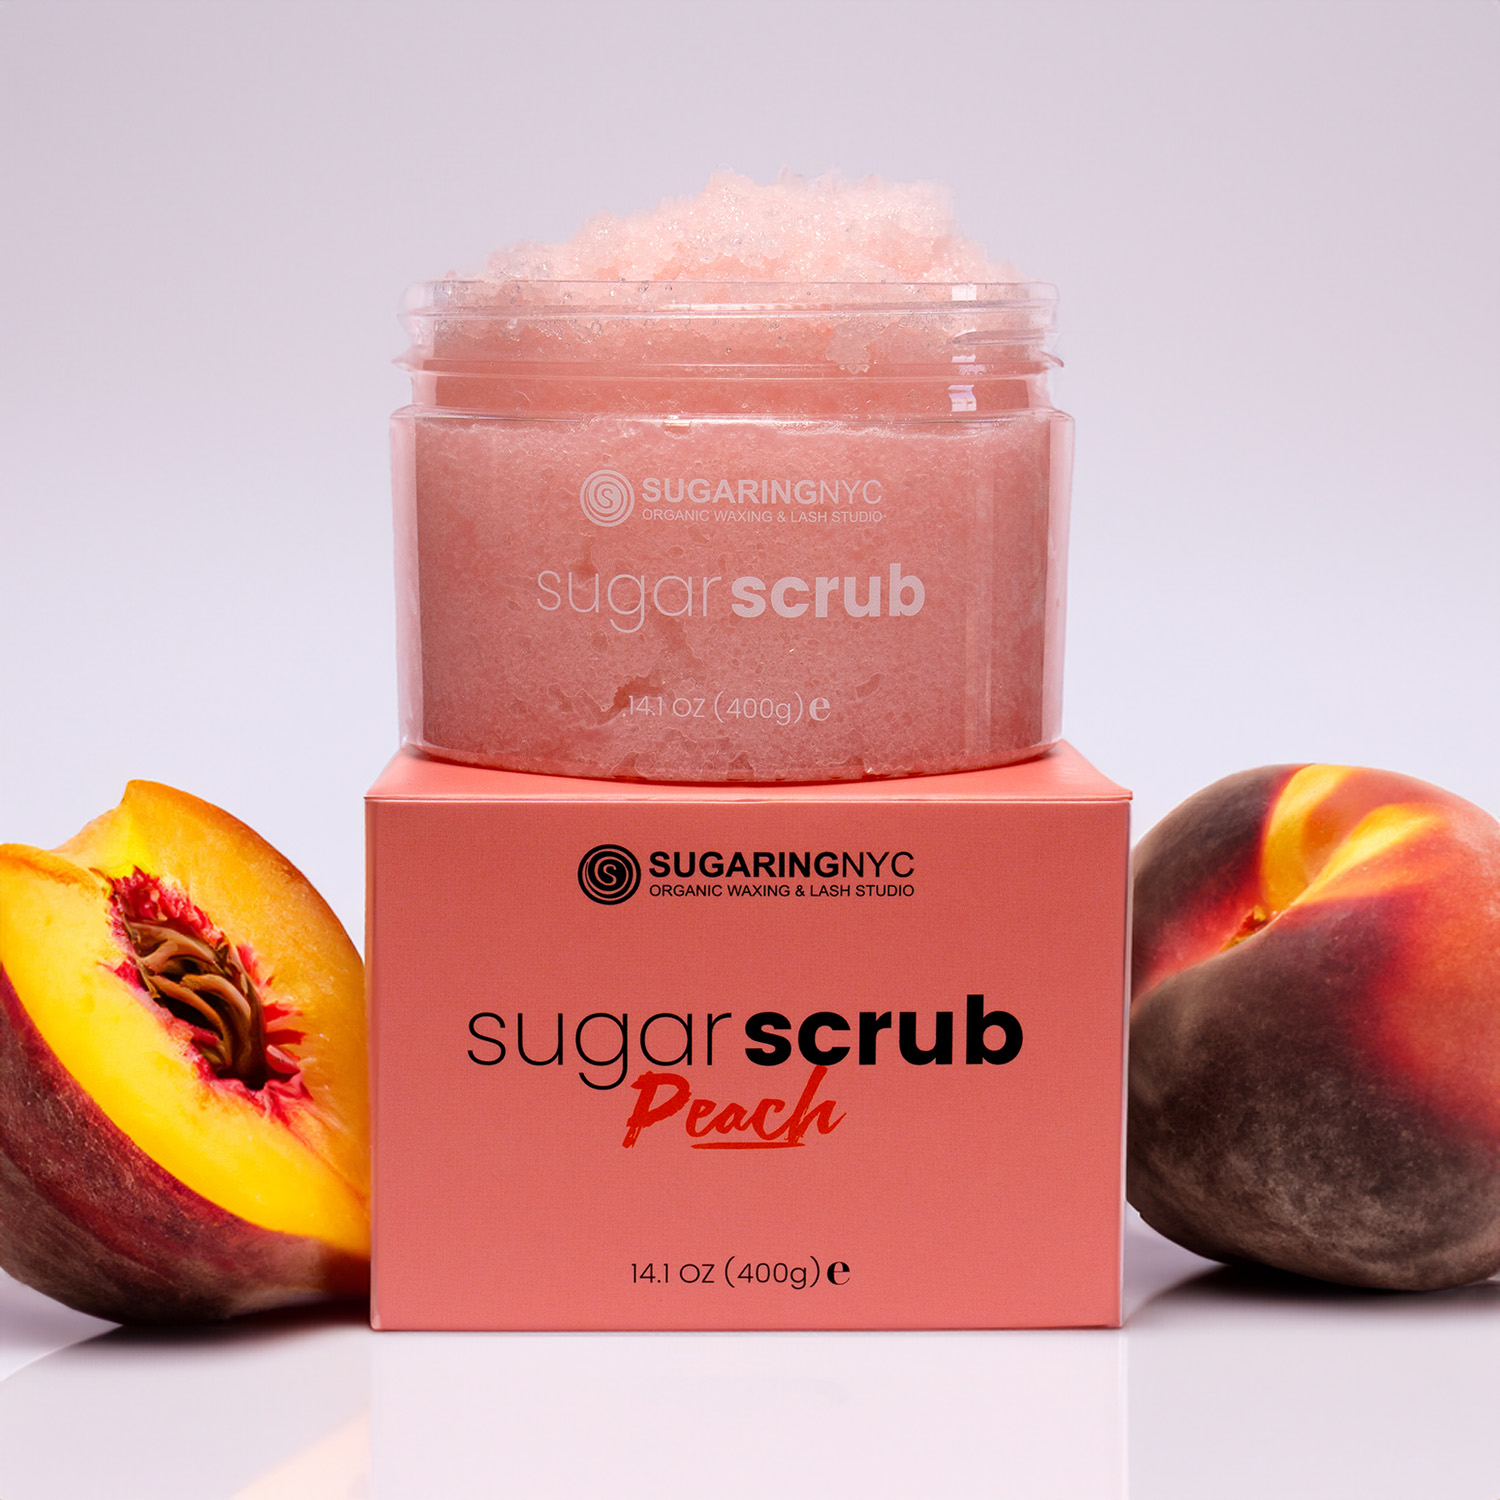 Sugaring NYC Signature Sugar Scrub – Juicy Peach